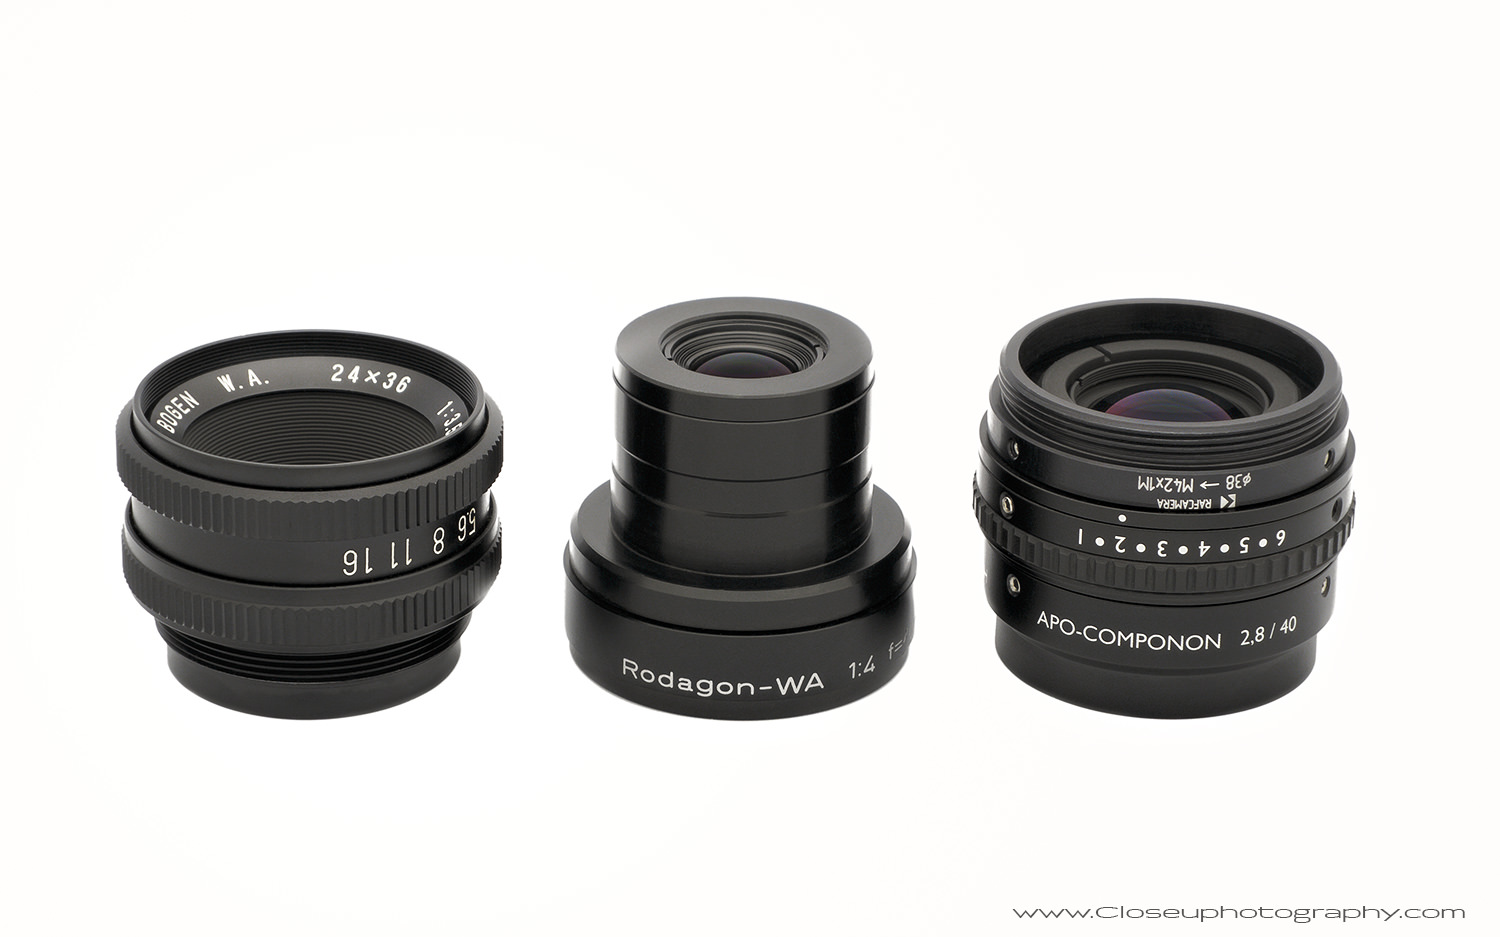 Rodenstock Rodagon WA 40mm f/4 Line Scan Lens Test — Close-up 